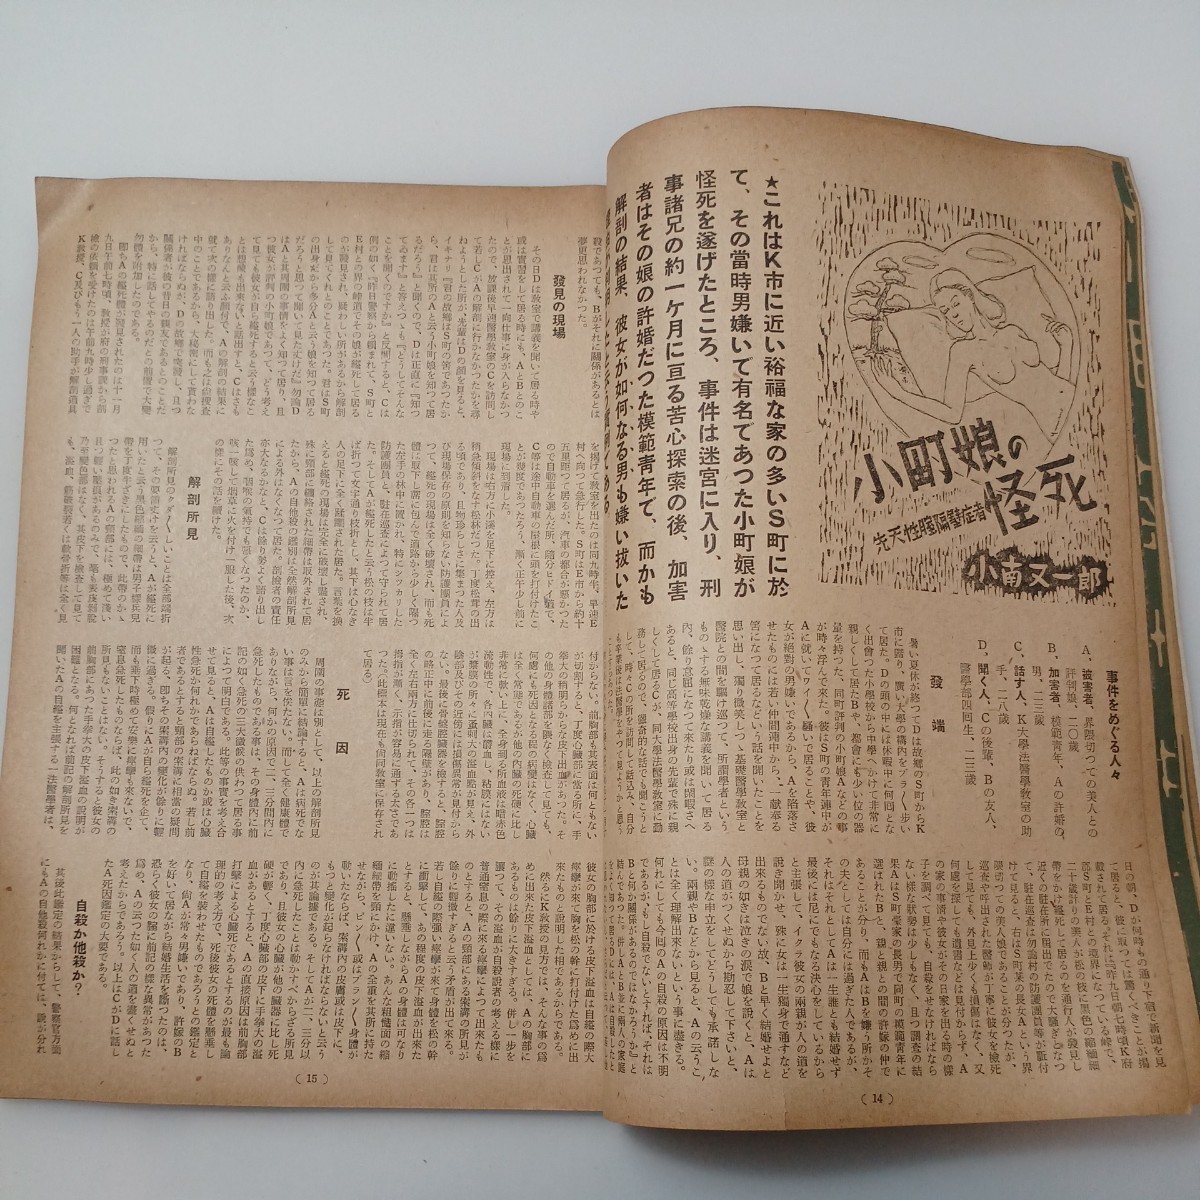 zaa-526♪医者の書く雑誌 ルックエンドヒヤー 1949年6月号 法医学特集 ルポタージュ 解剖室の実態 の画像5